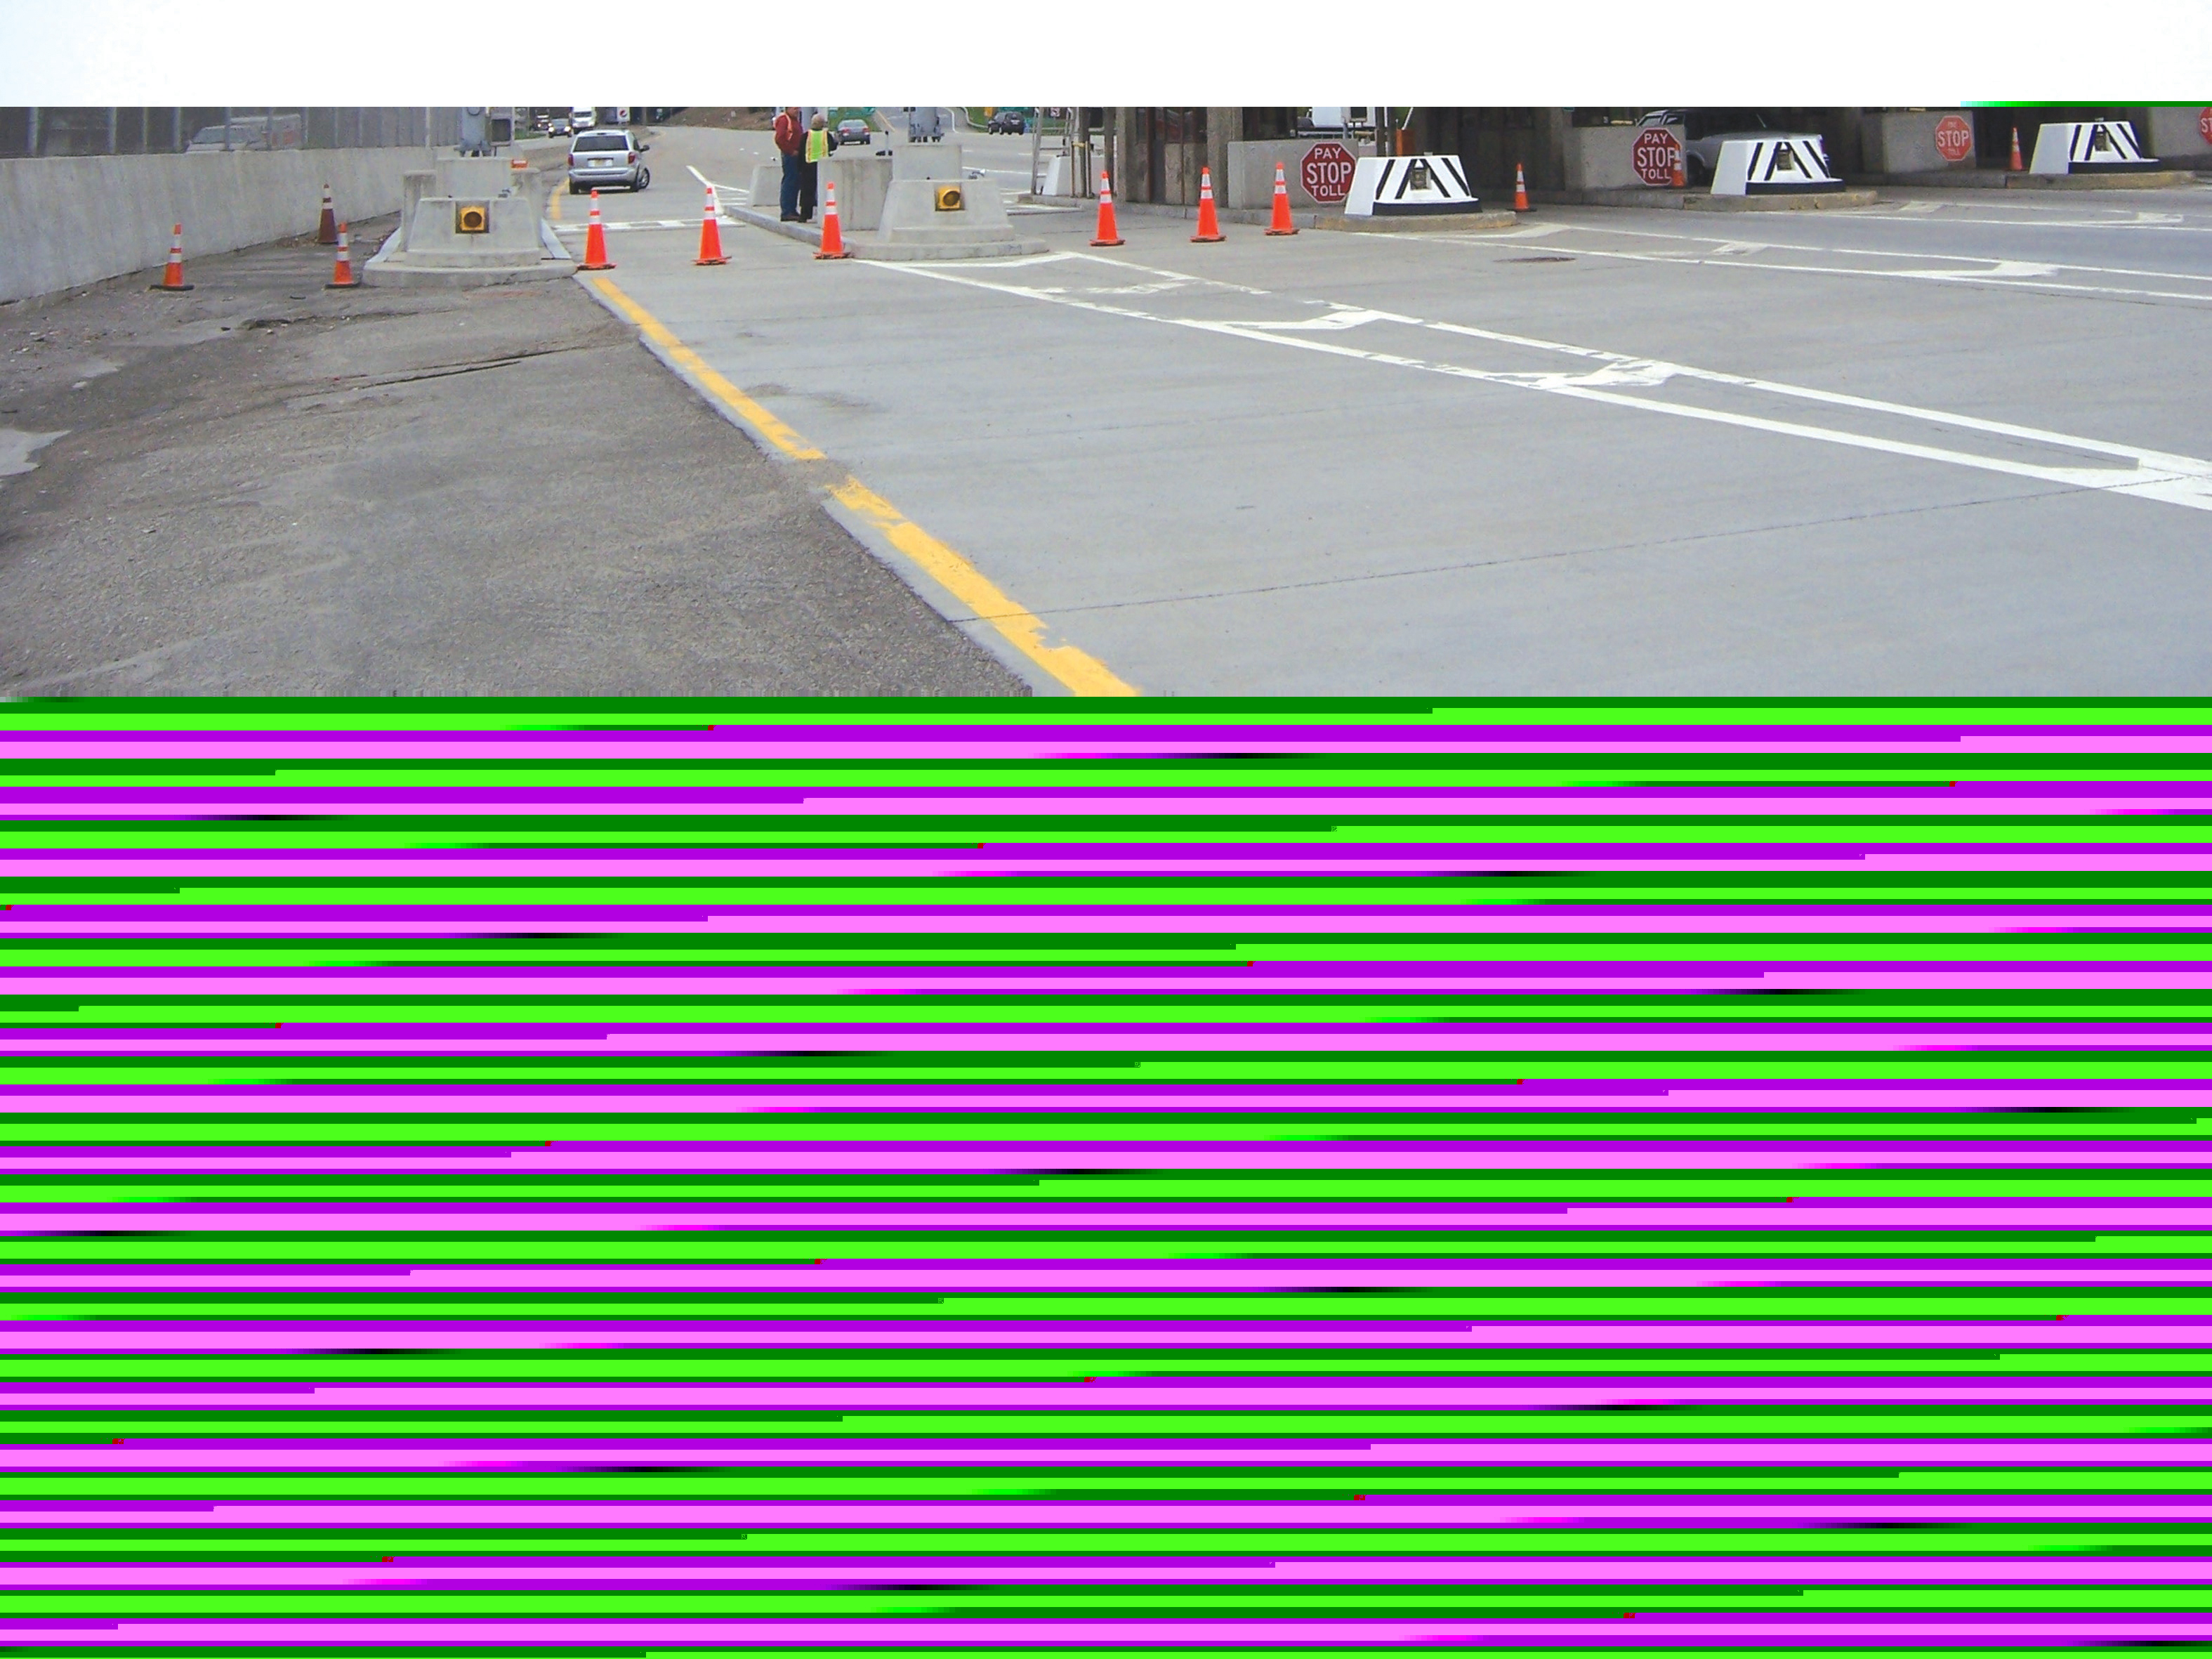 Test toll lane at Beacon Bridge, NY